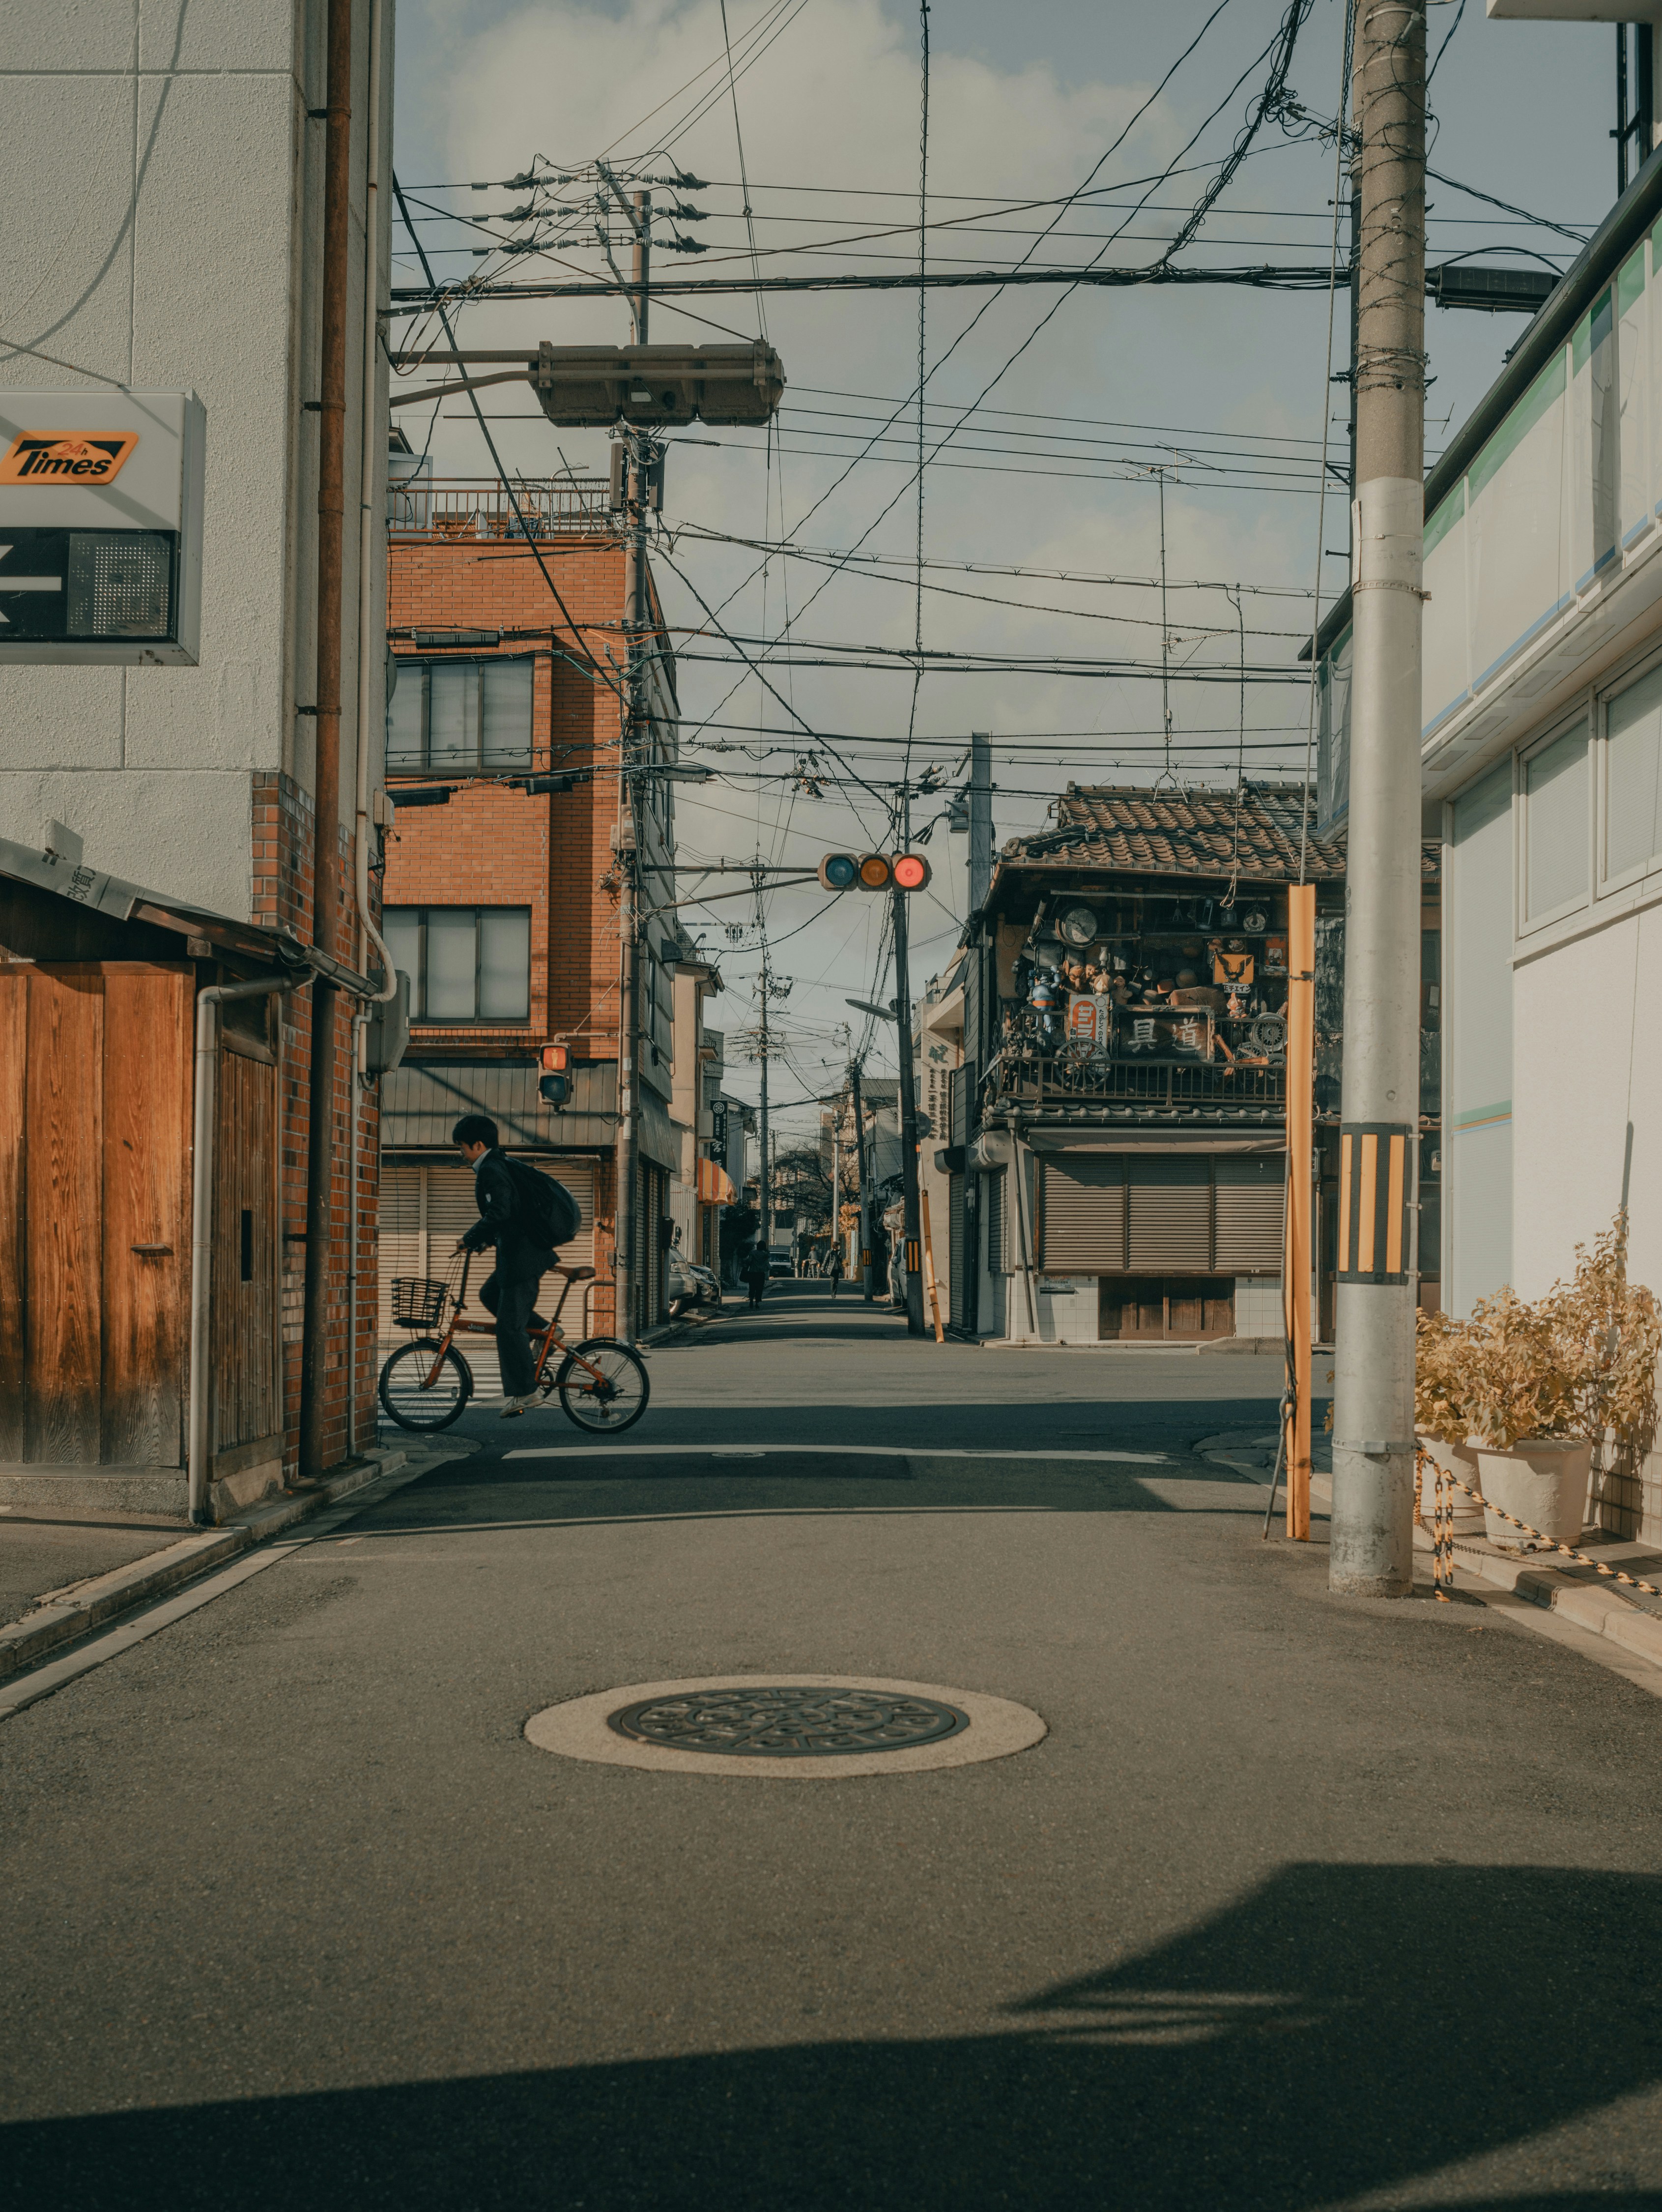 Japan sexy street